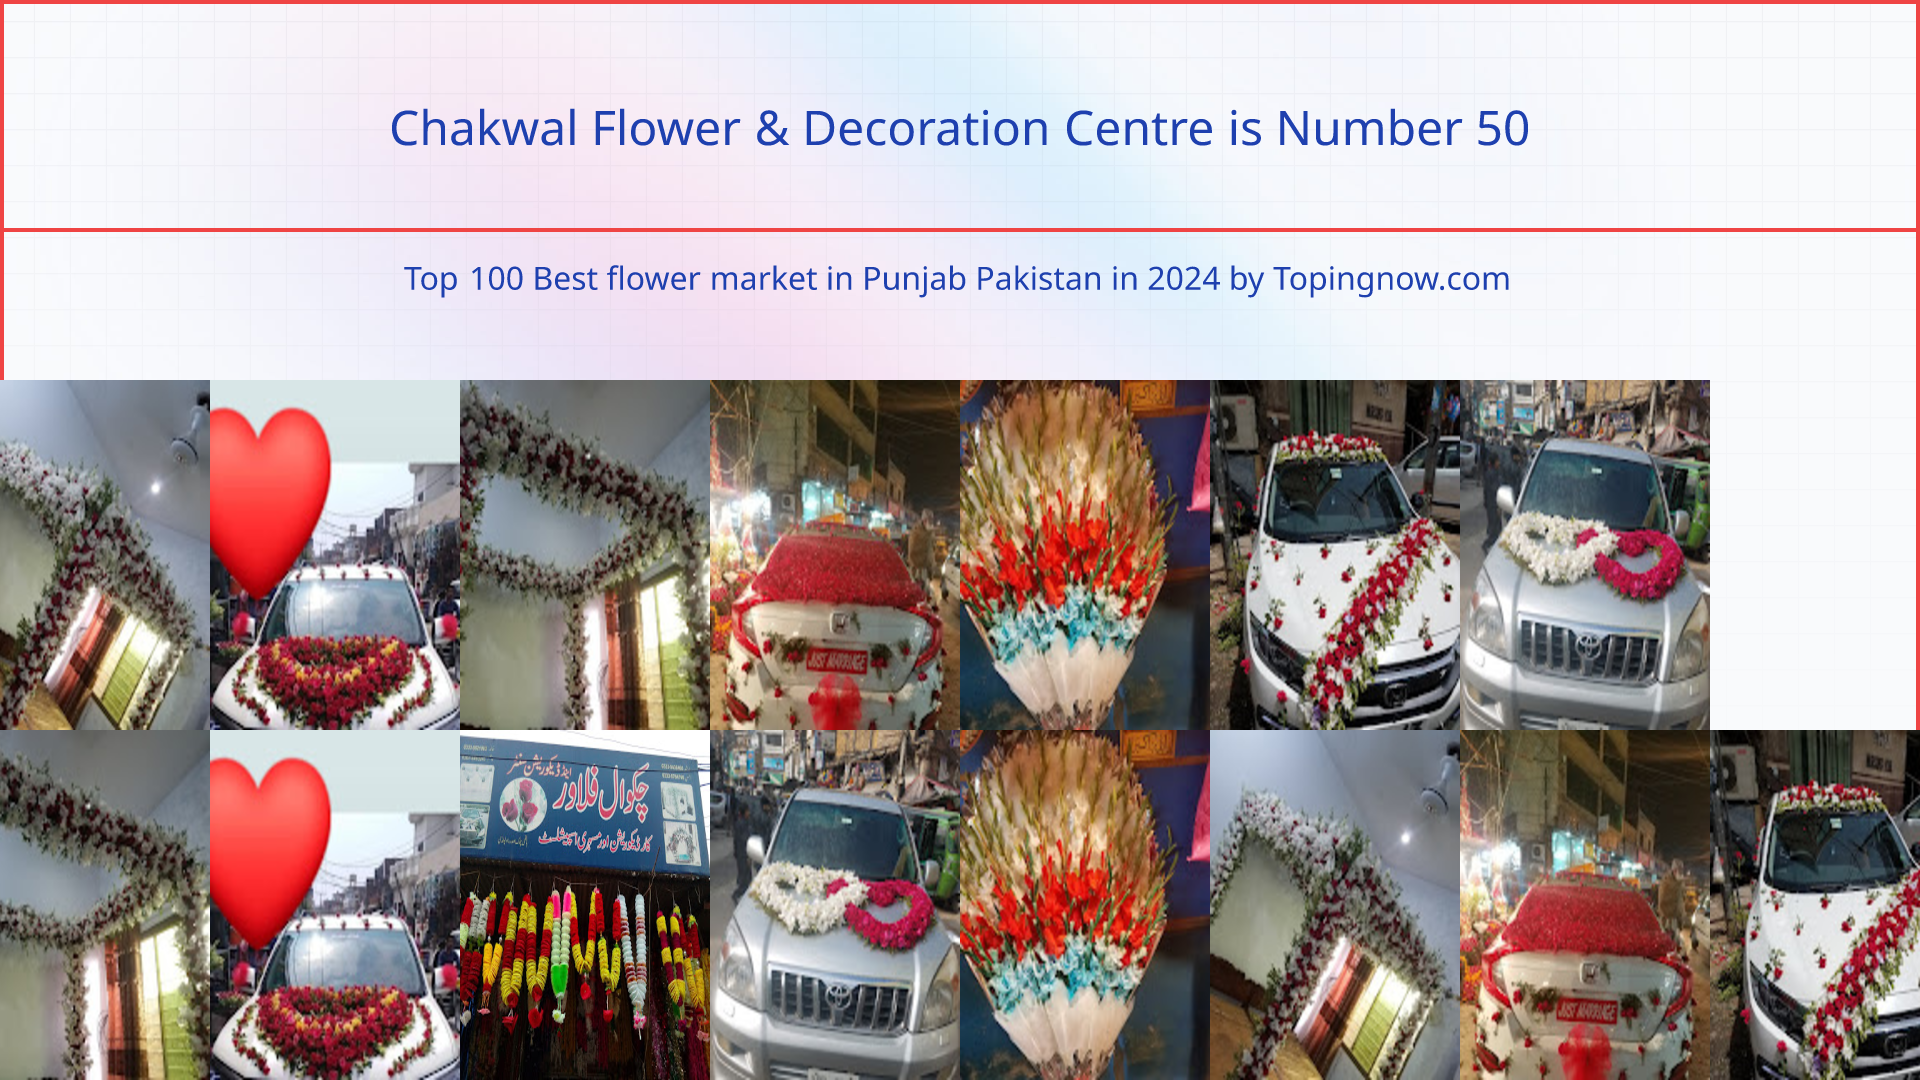 Chakwal Flower & Decoration Centre: Top 100 Best flower market in Punjab Pakistan in 2024